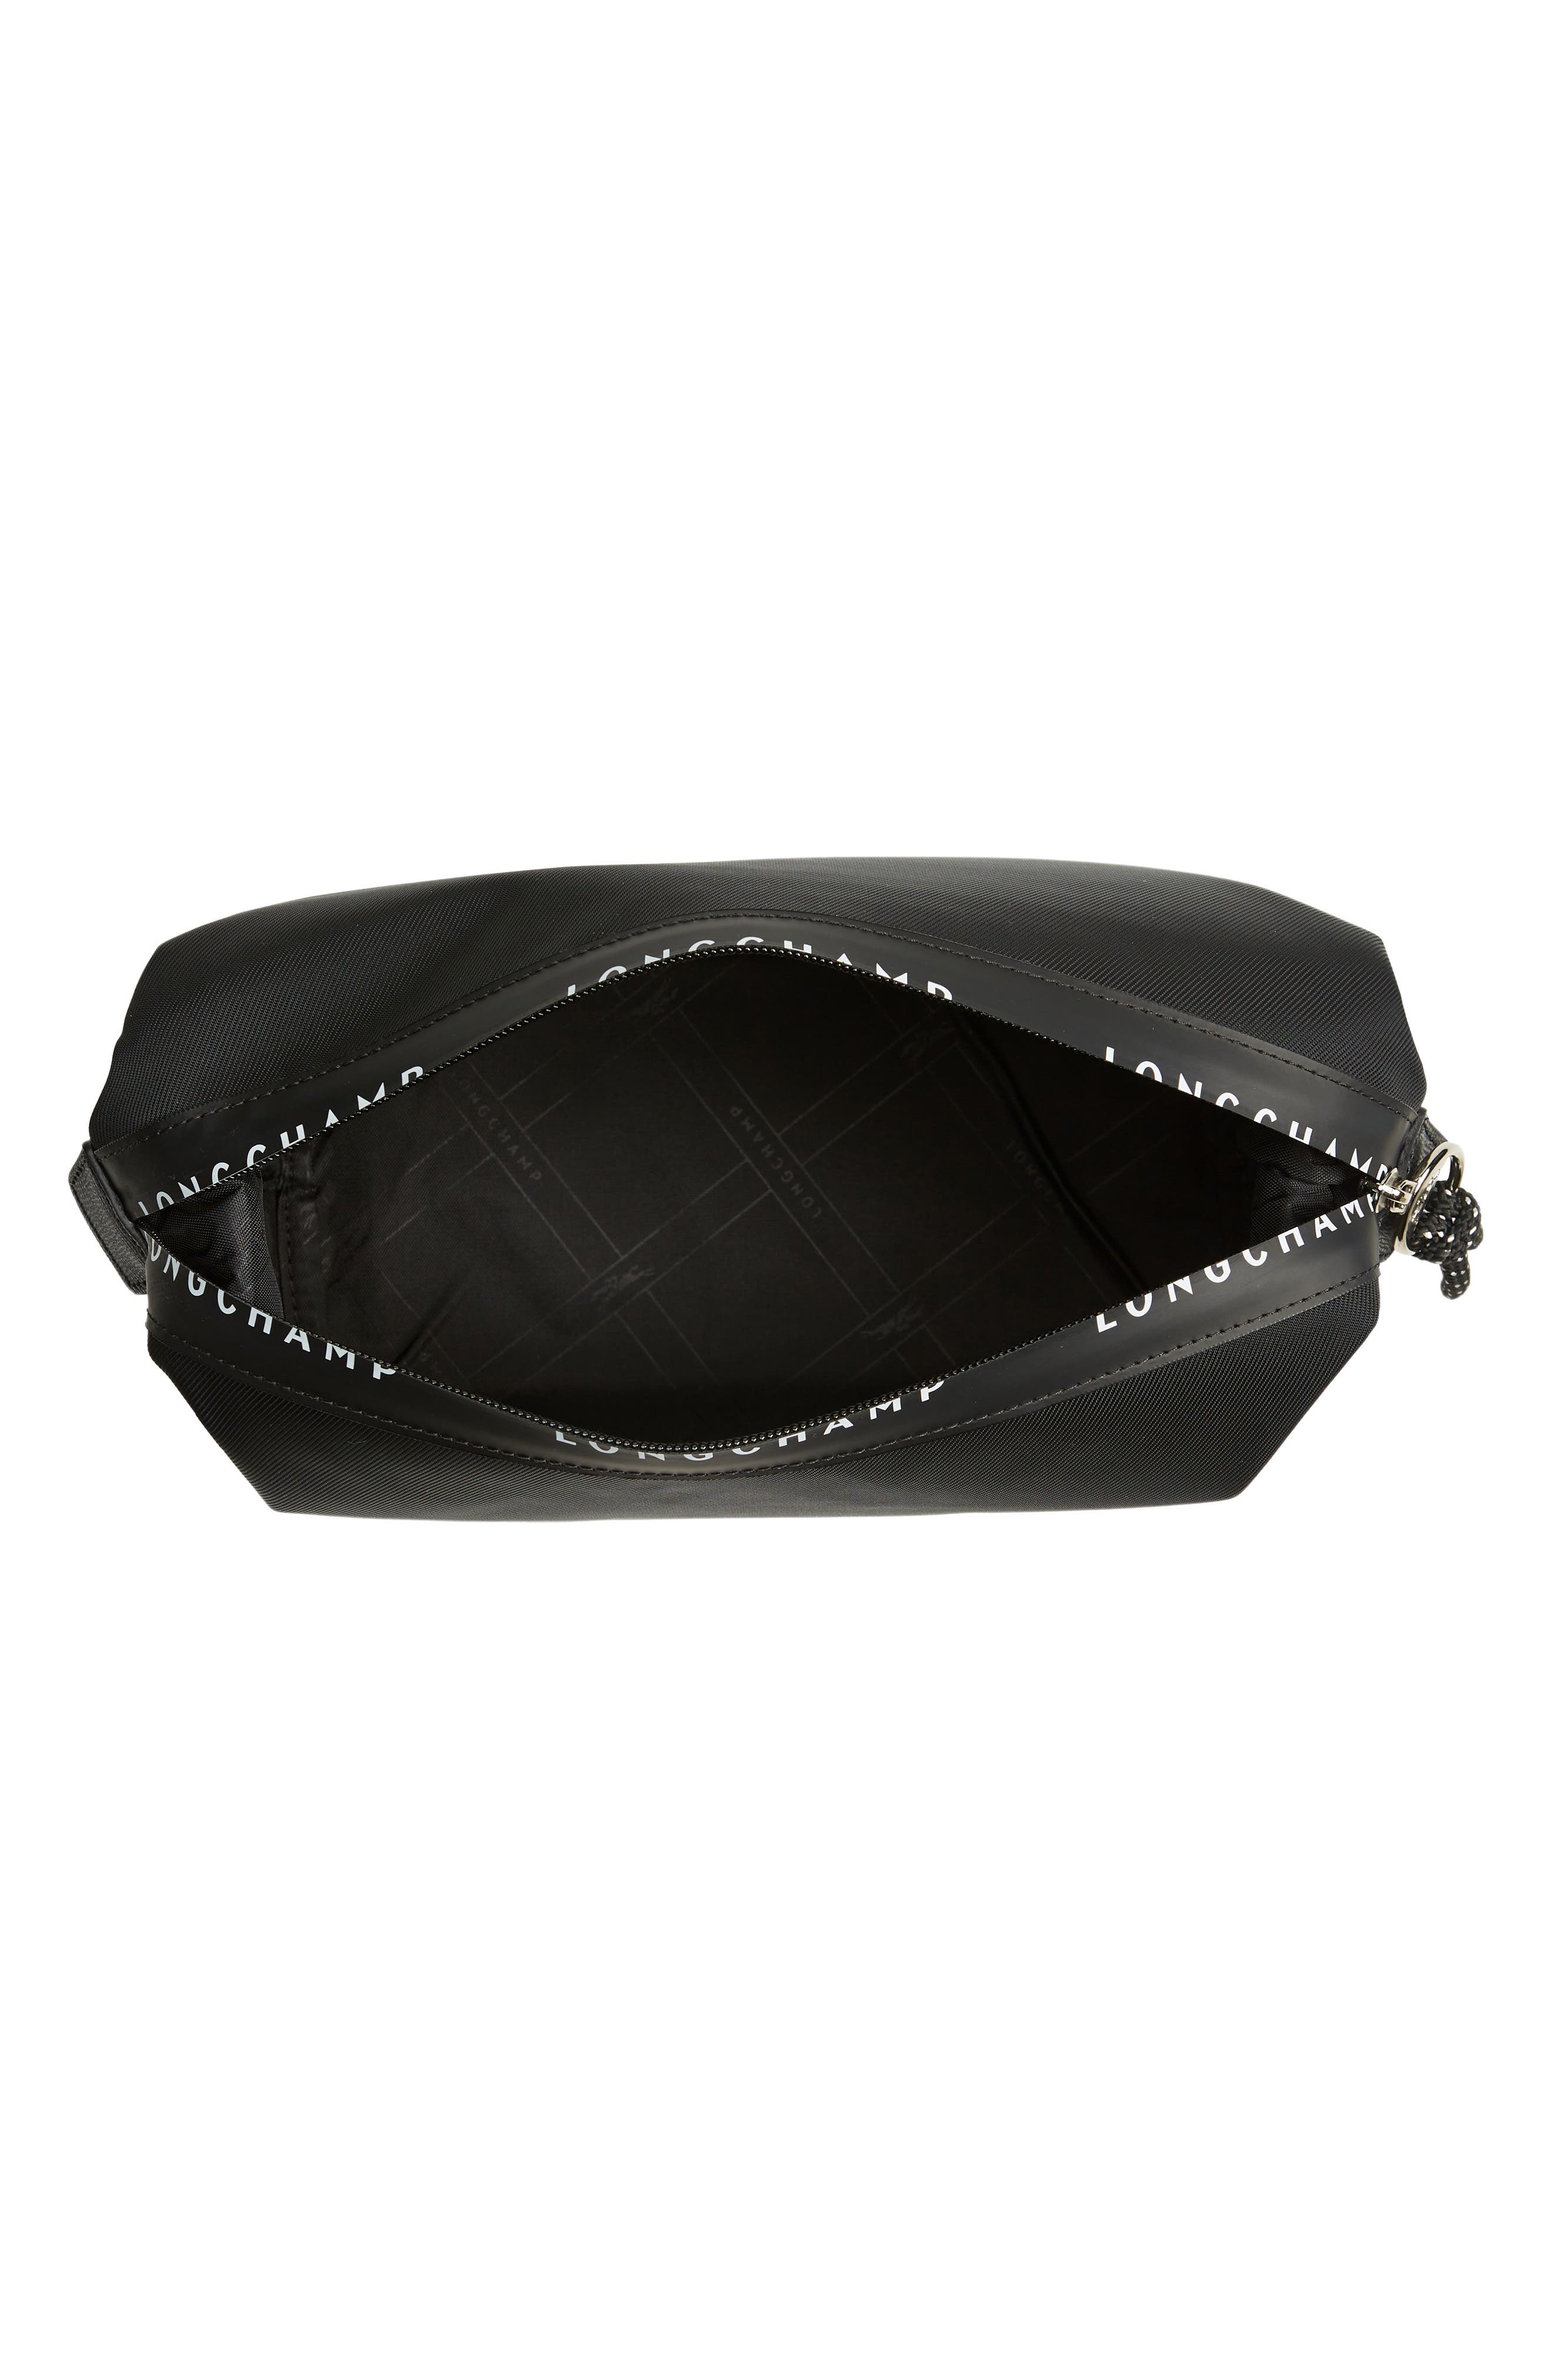 Longchamp Le Pliage Energy Recycled Nylon Toiletry Bag in Black